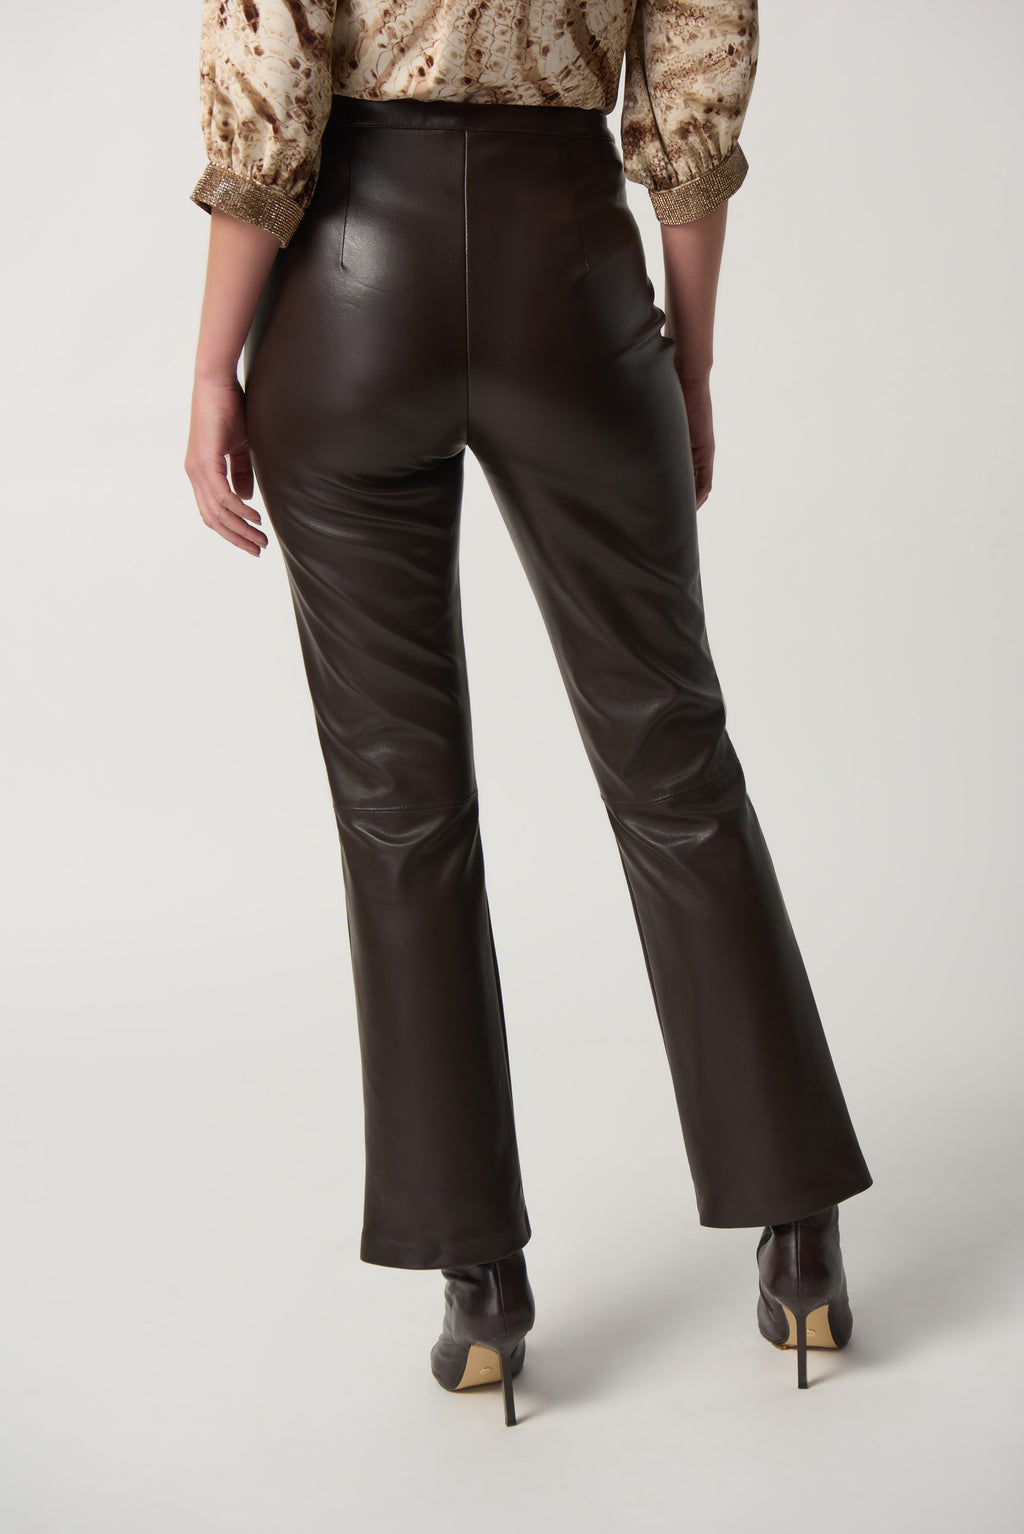 Joseph Ribkoff Mocha Flared Faux-Leather Pants Style 233179